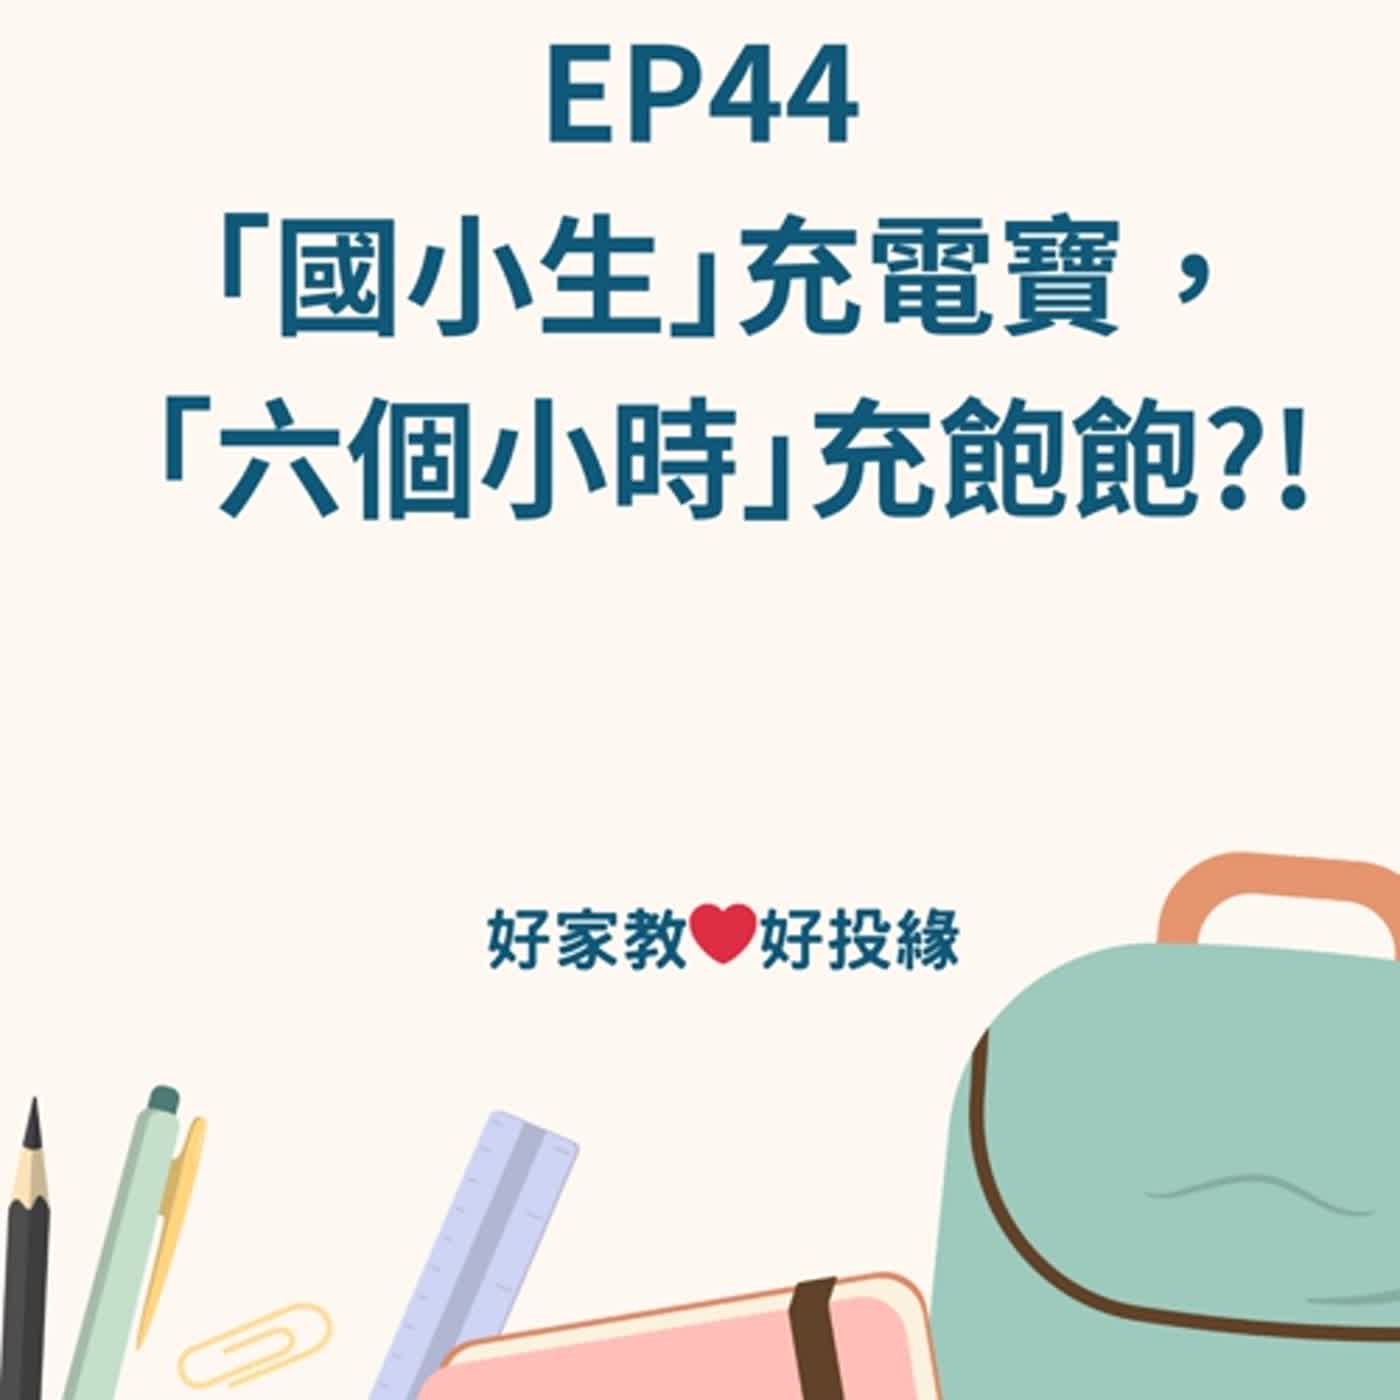 🎙 EP44:「國小生｣充電寶，「六個小時｣充飽飽?!🎙